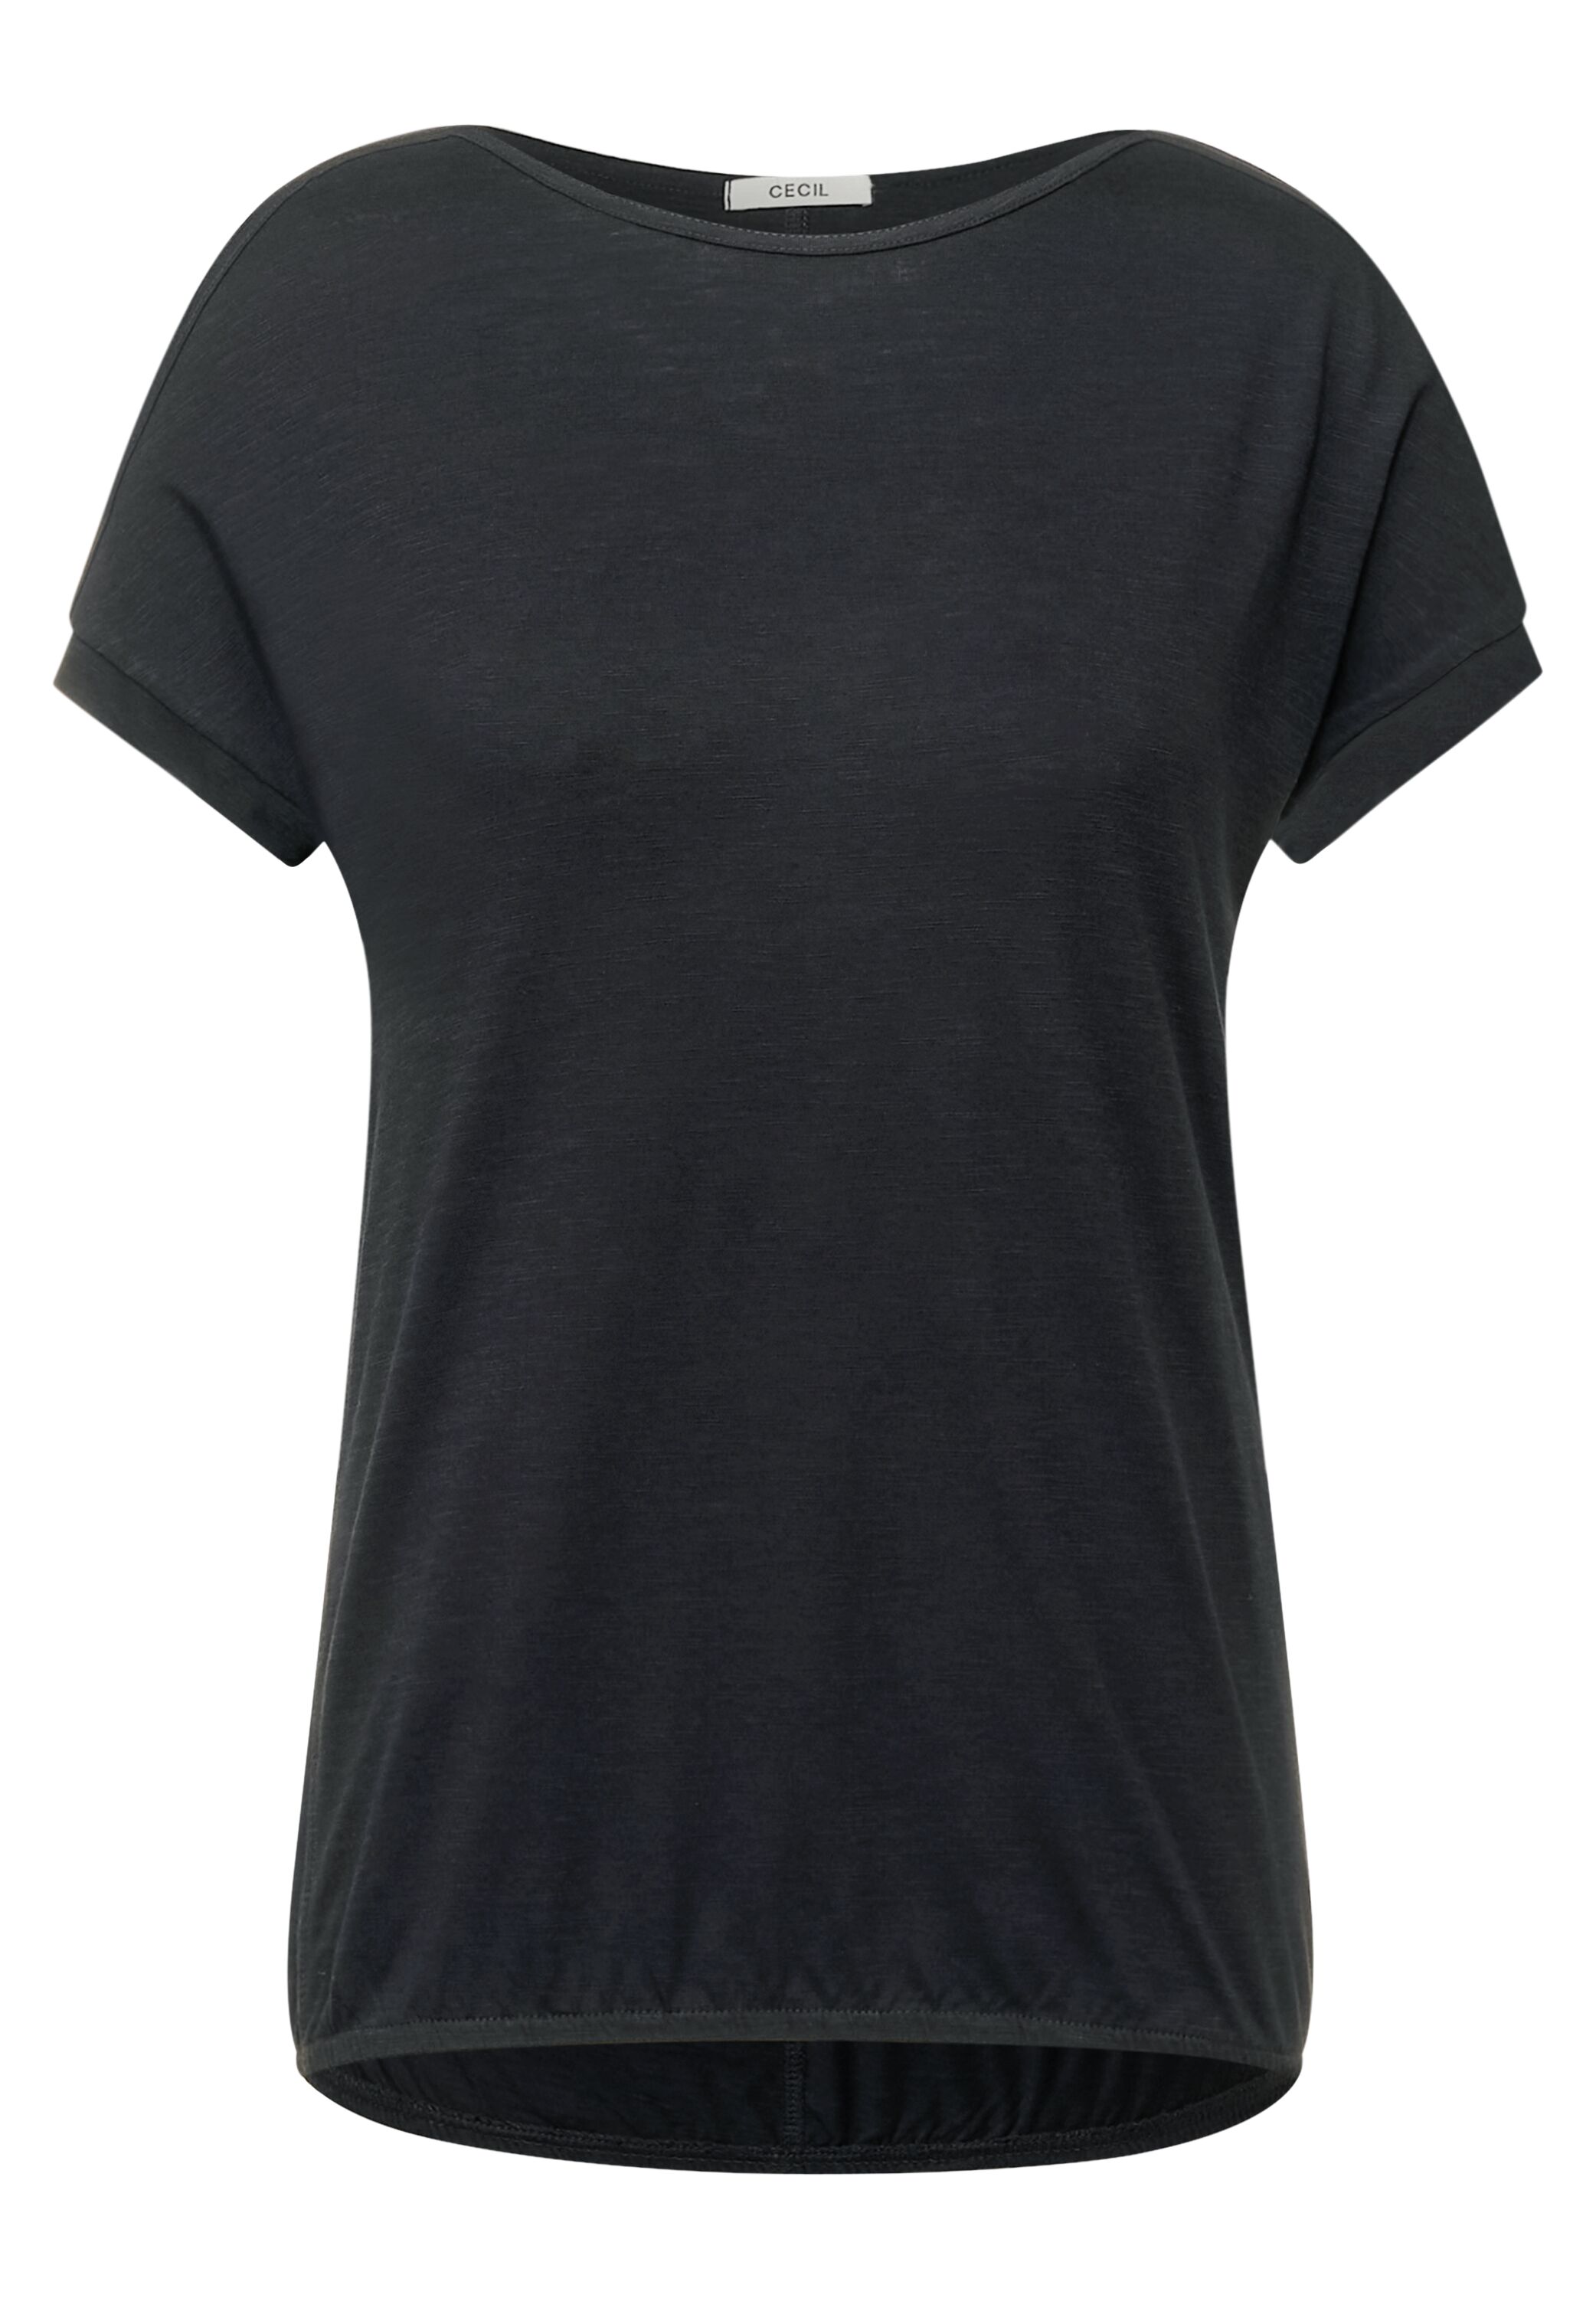 CECIL T-Shirt in Carbon Grey im SALE reduziert B316344-12538 - CONCEPT Mode